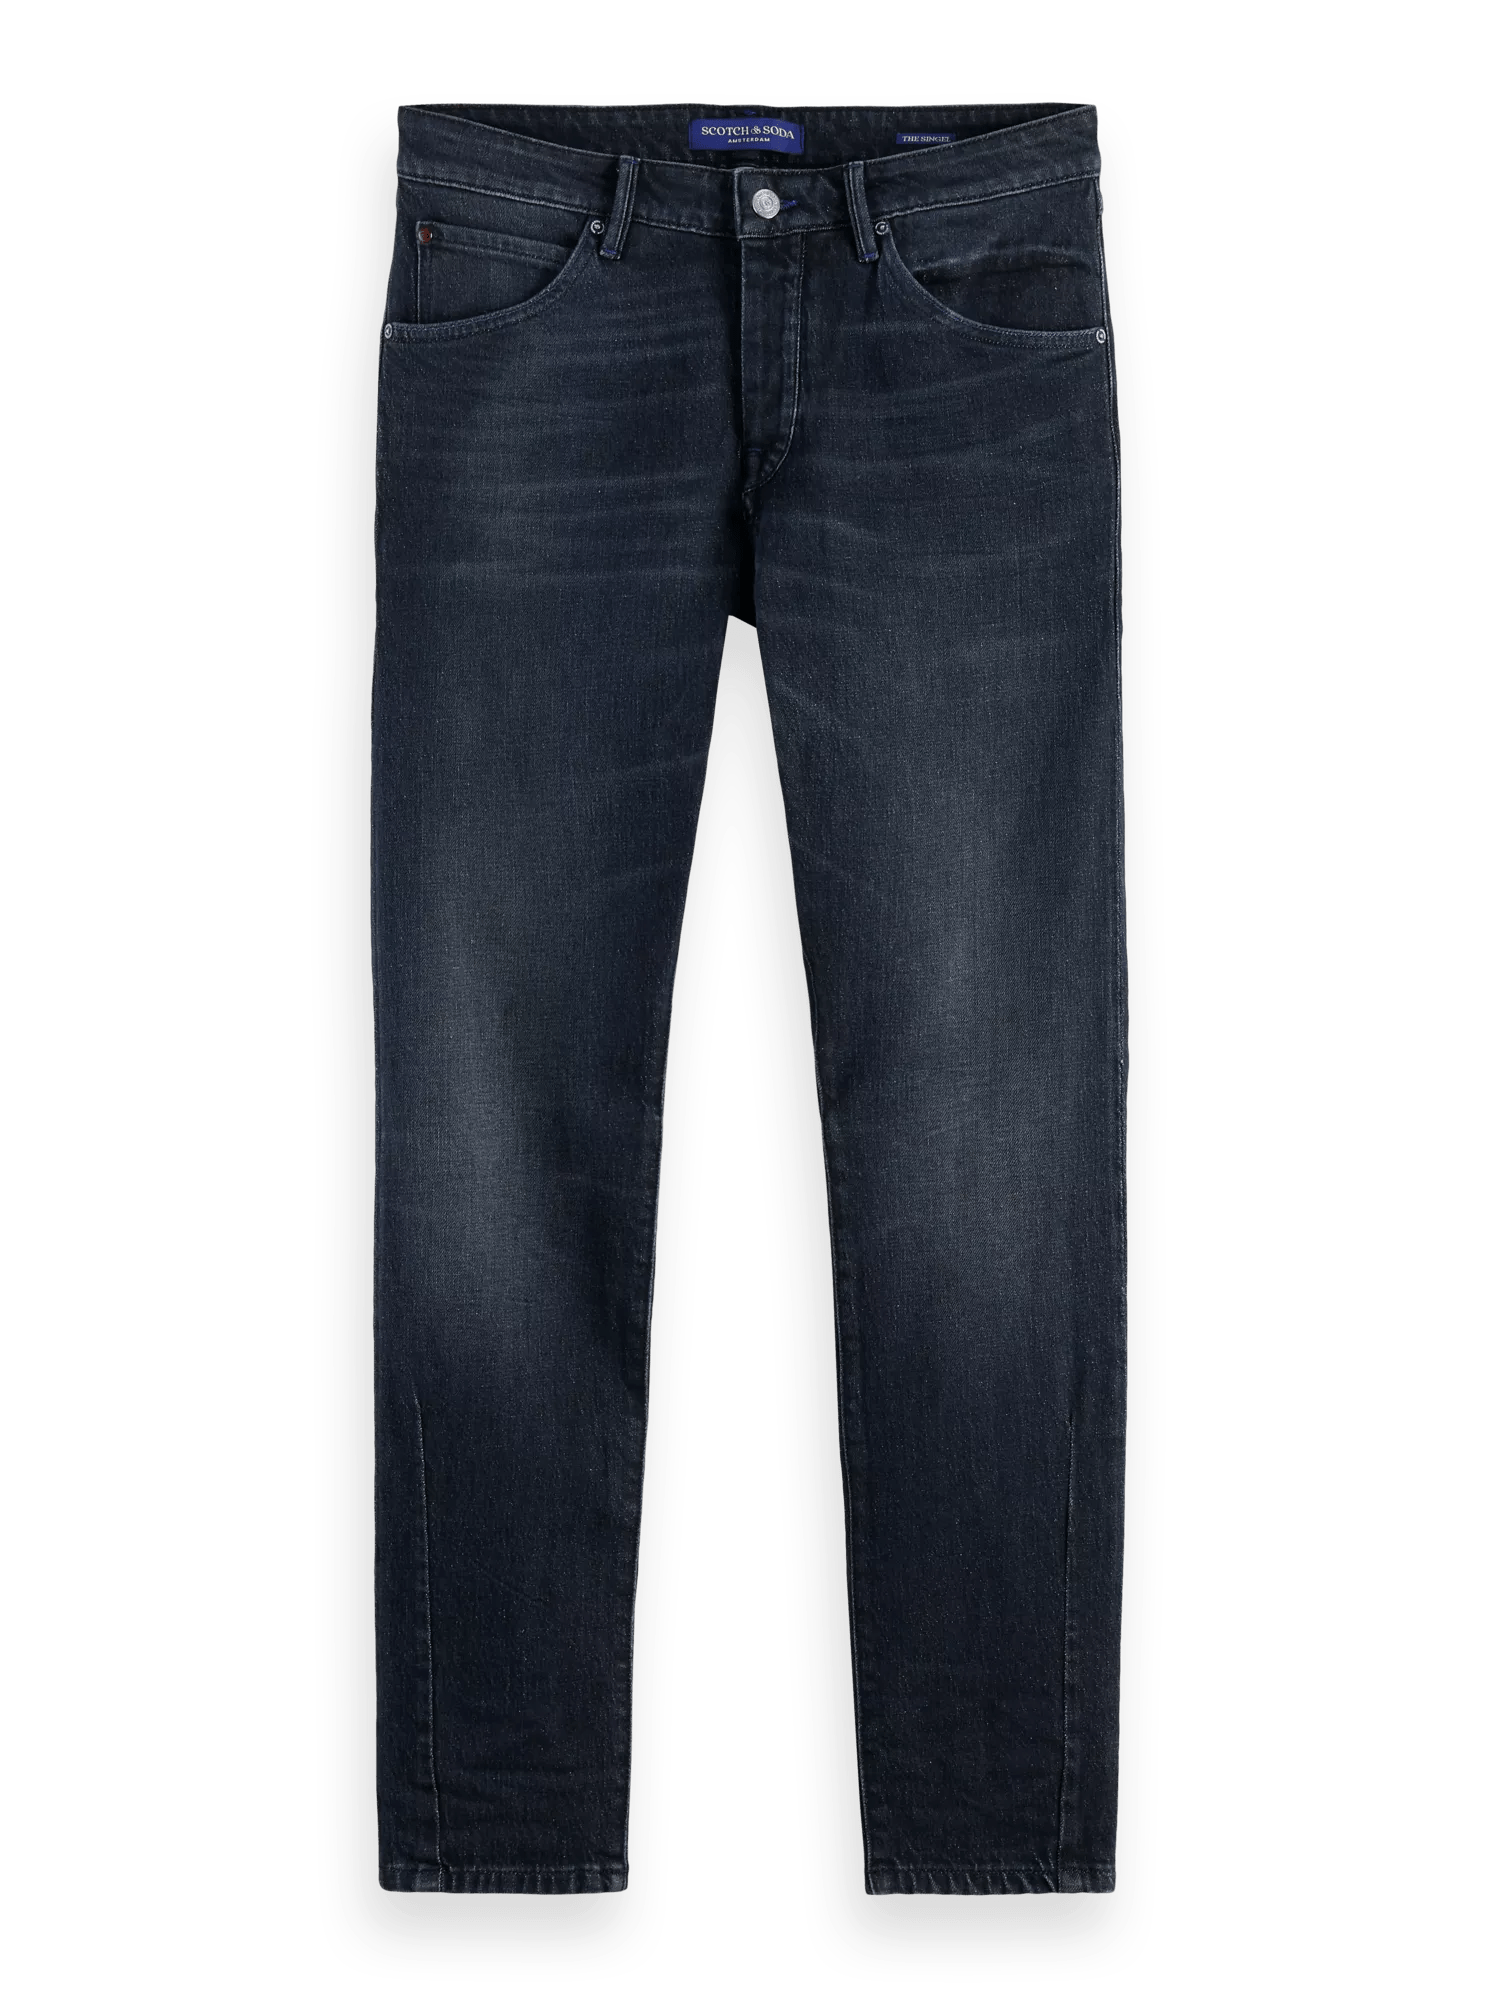 Scotch & Soda The Singel Slim Tapered Fit Jeans – Skygazer FNT